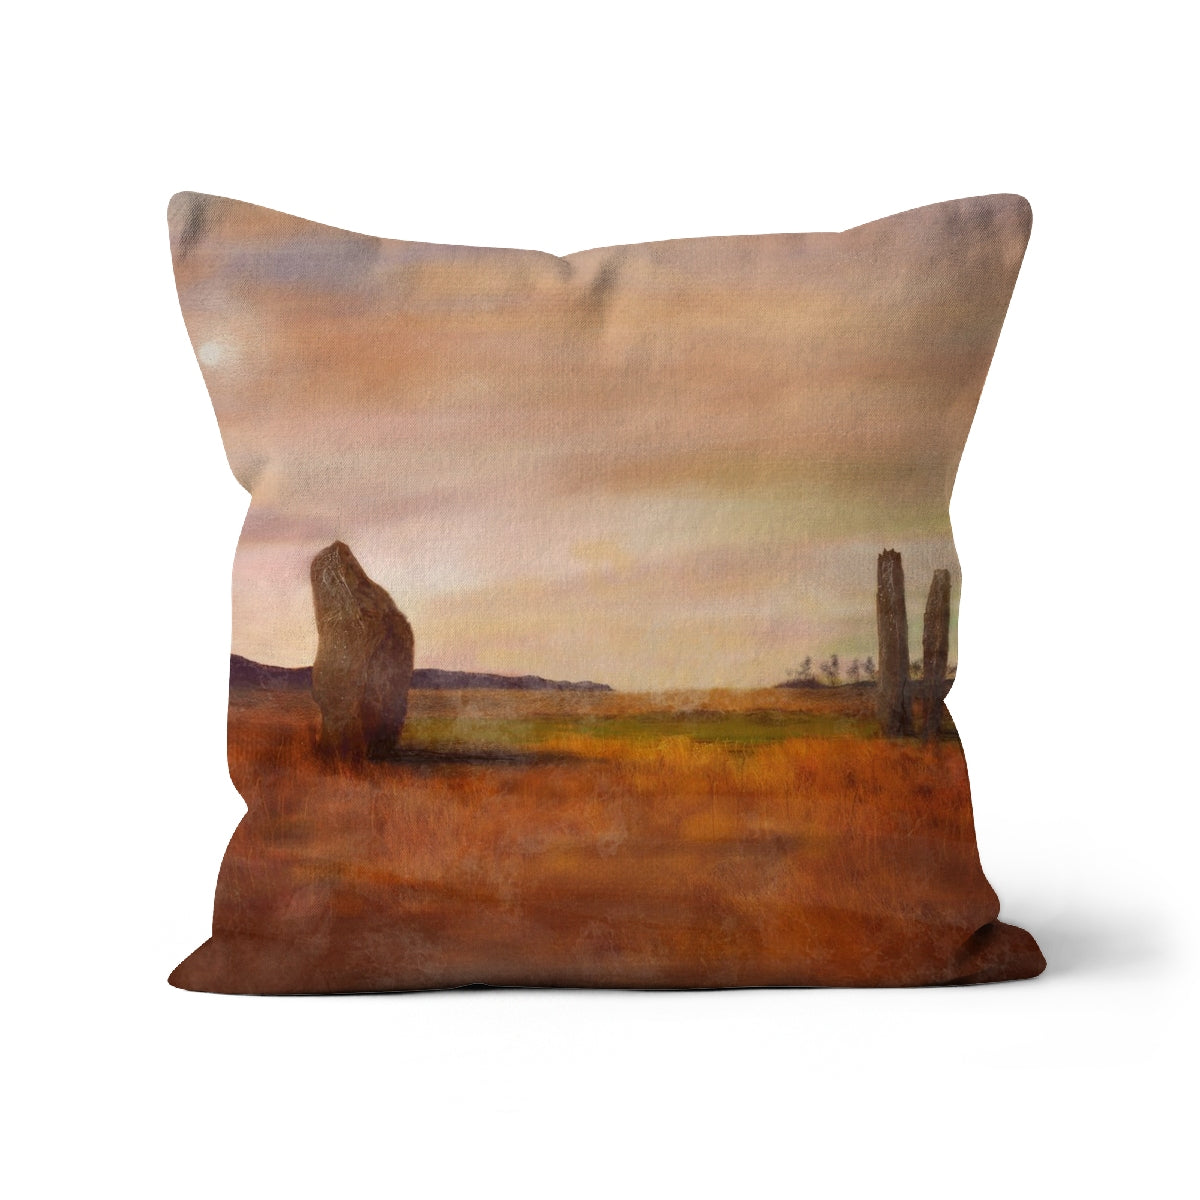 Machrie Moor Arran Art Gifts Cushion-Cushions-Arran Art Gallery-Linen-24"x24"-Paintings, Prints, Homeware, Art Gifts From Scotland By Scottish Artist Kevin Hunter